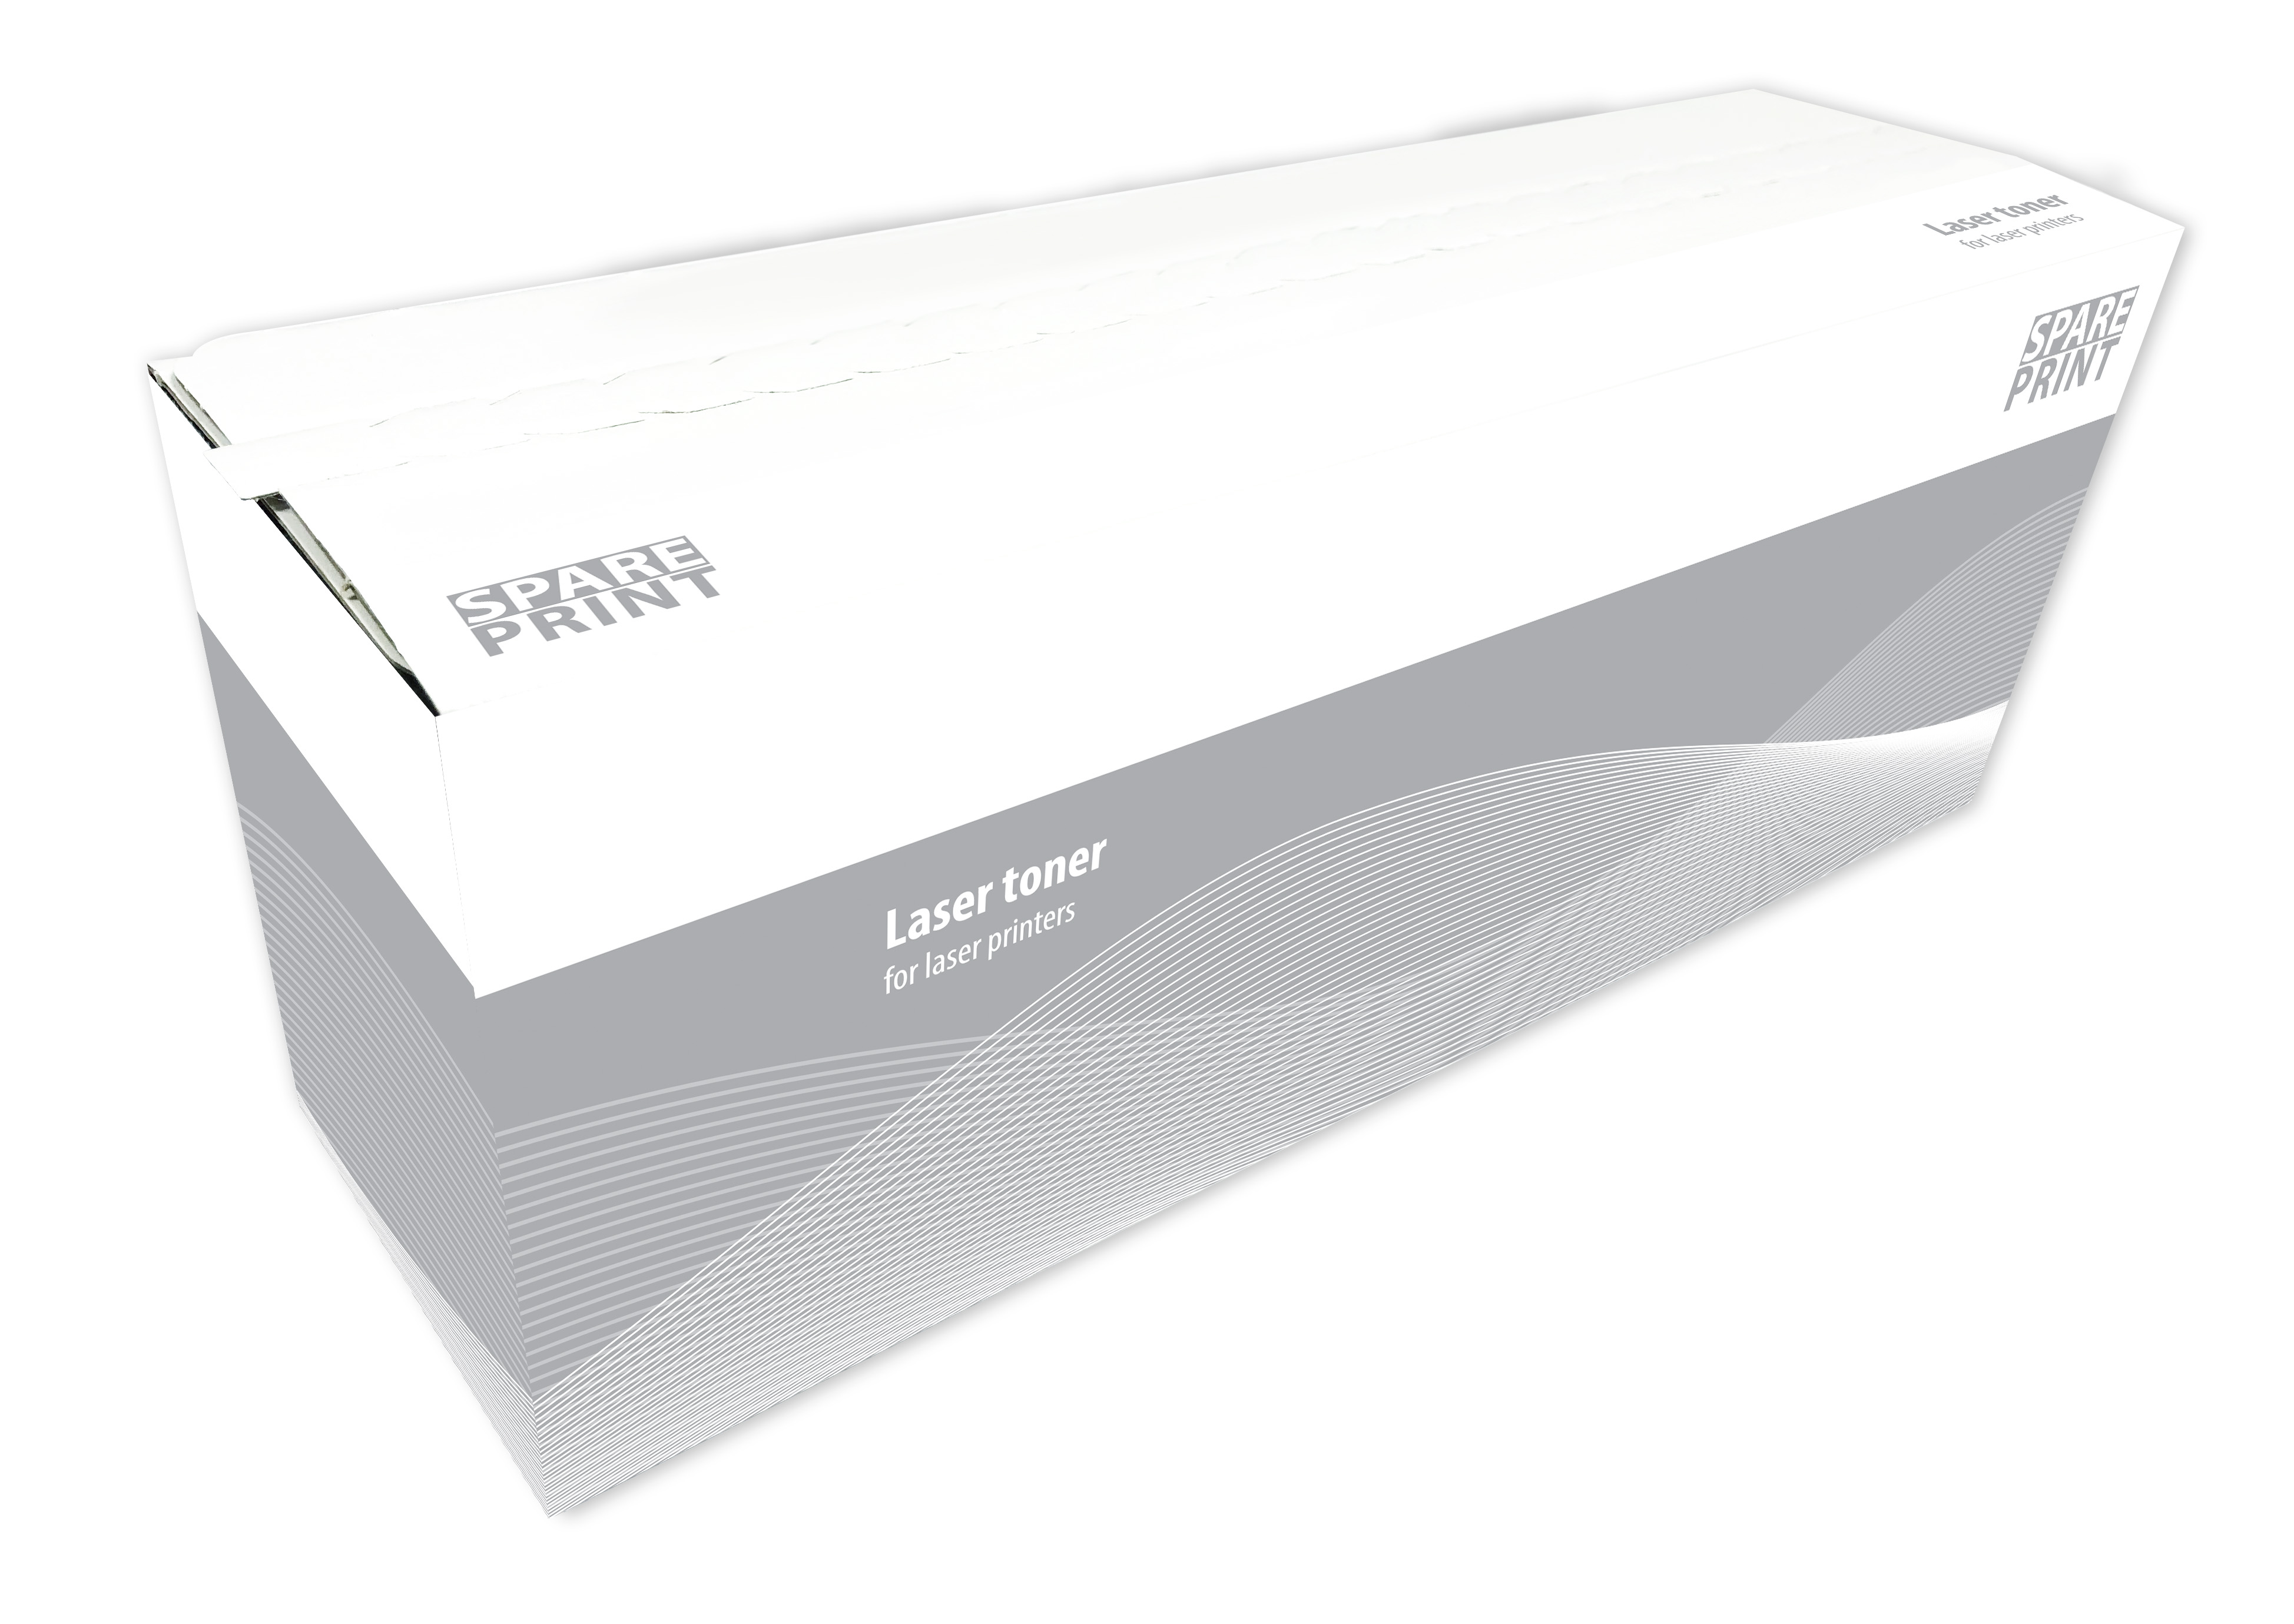 SPARE PRINT kompatibilní toner 106R02760 Cyan pro tiskárny Xerox